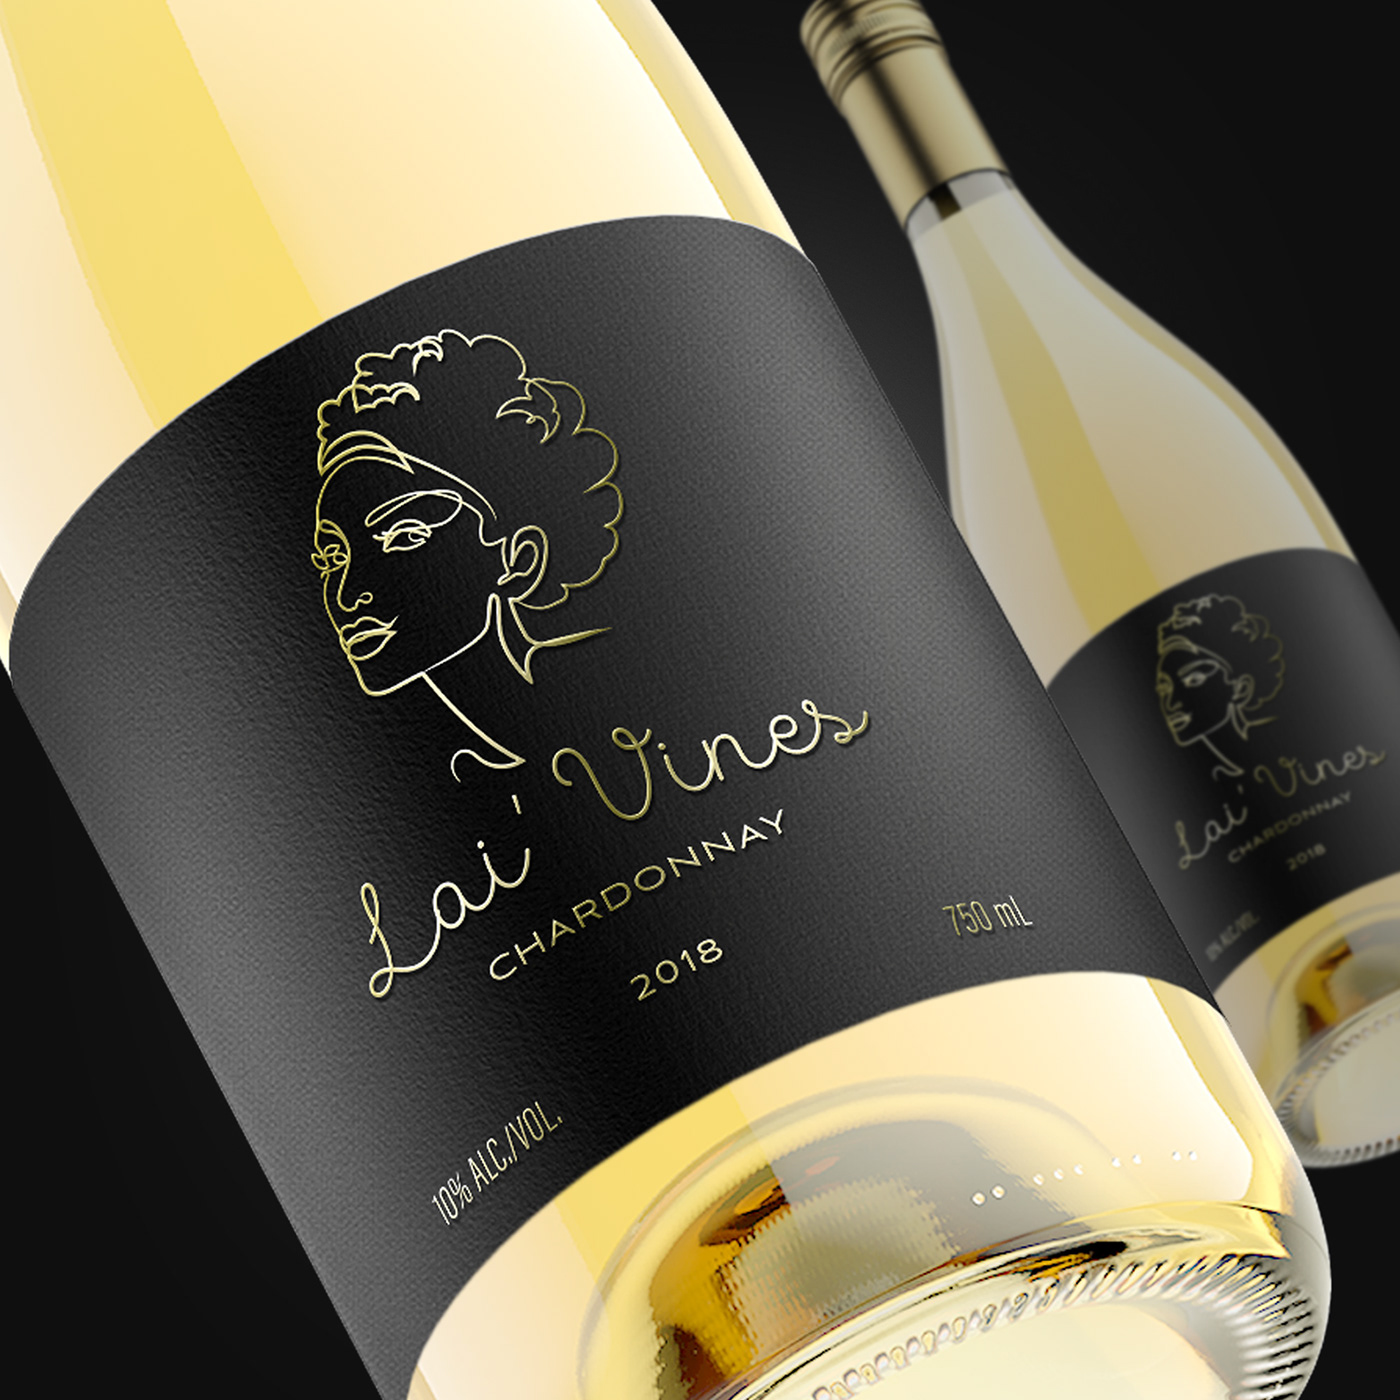 gold emboss print Hand-drawn artwork line drawing luxury wine label premium label design white wine label wine label Wine label Design woman portrait